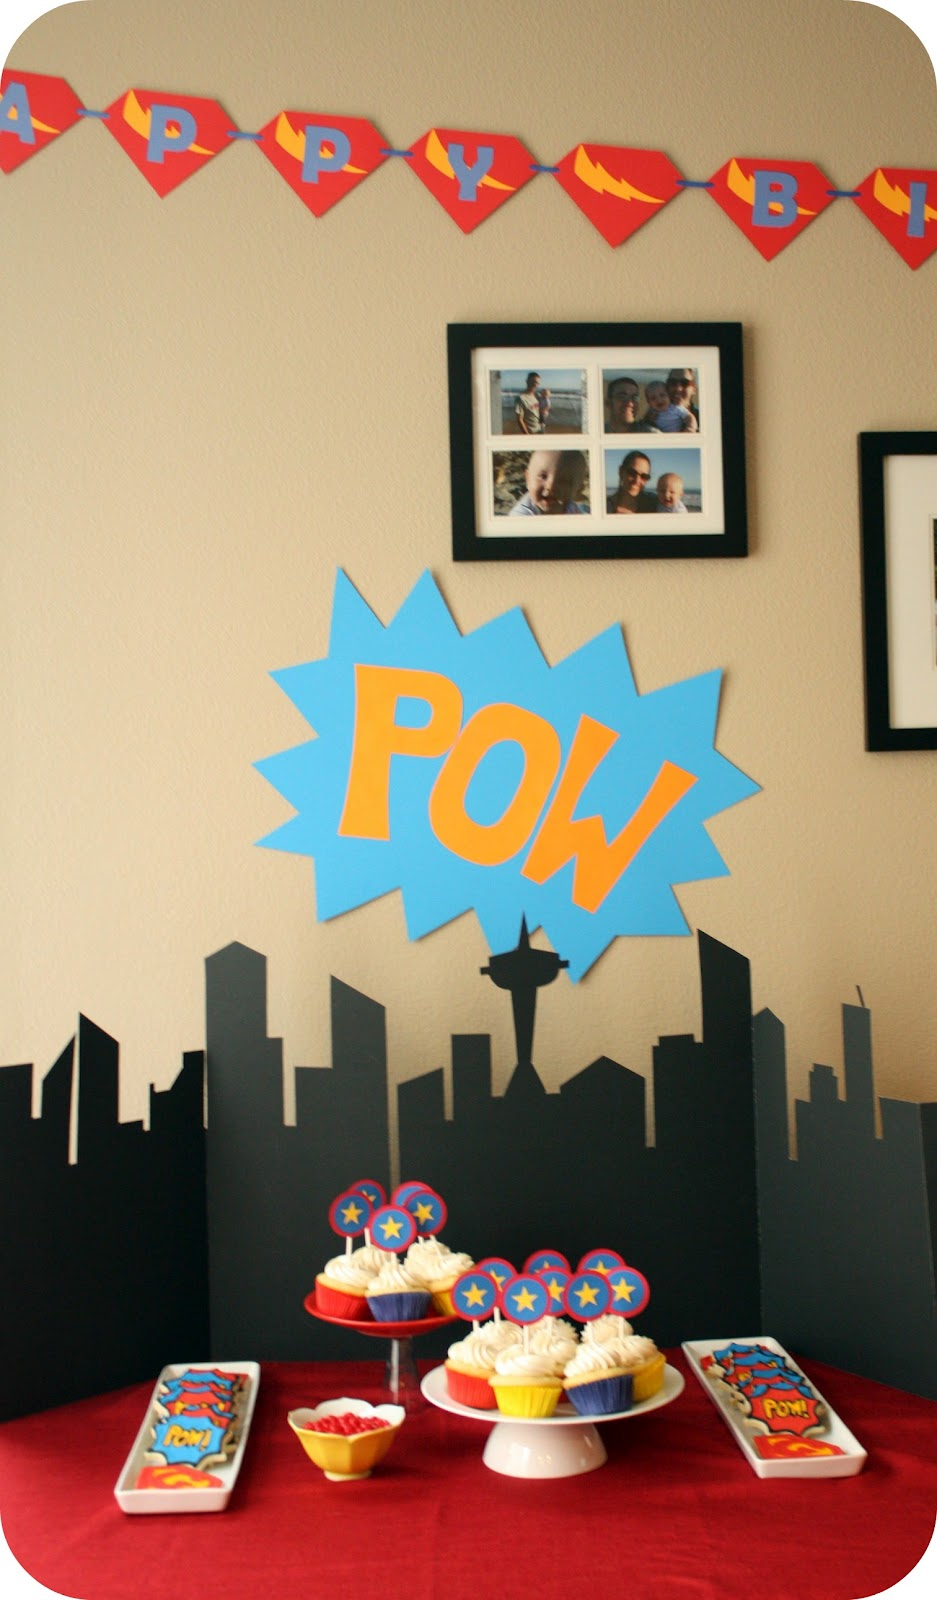 Superhero Party Treats And A Free Printable - Free Printable Superhero Skyline